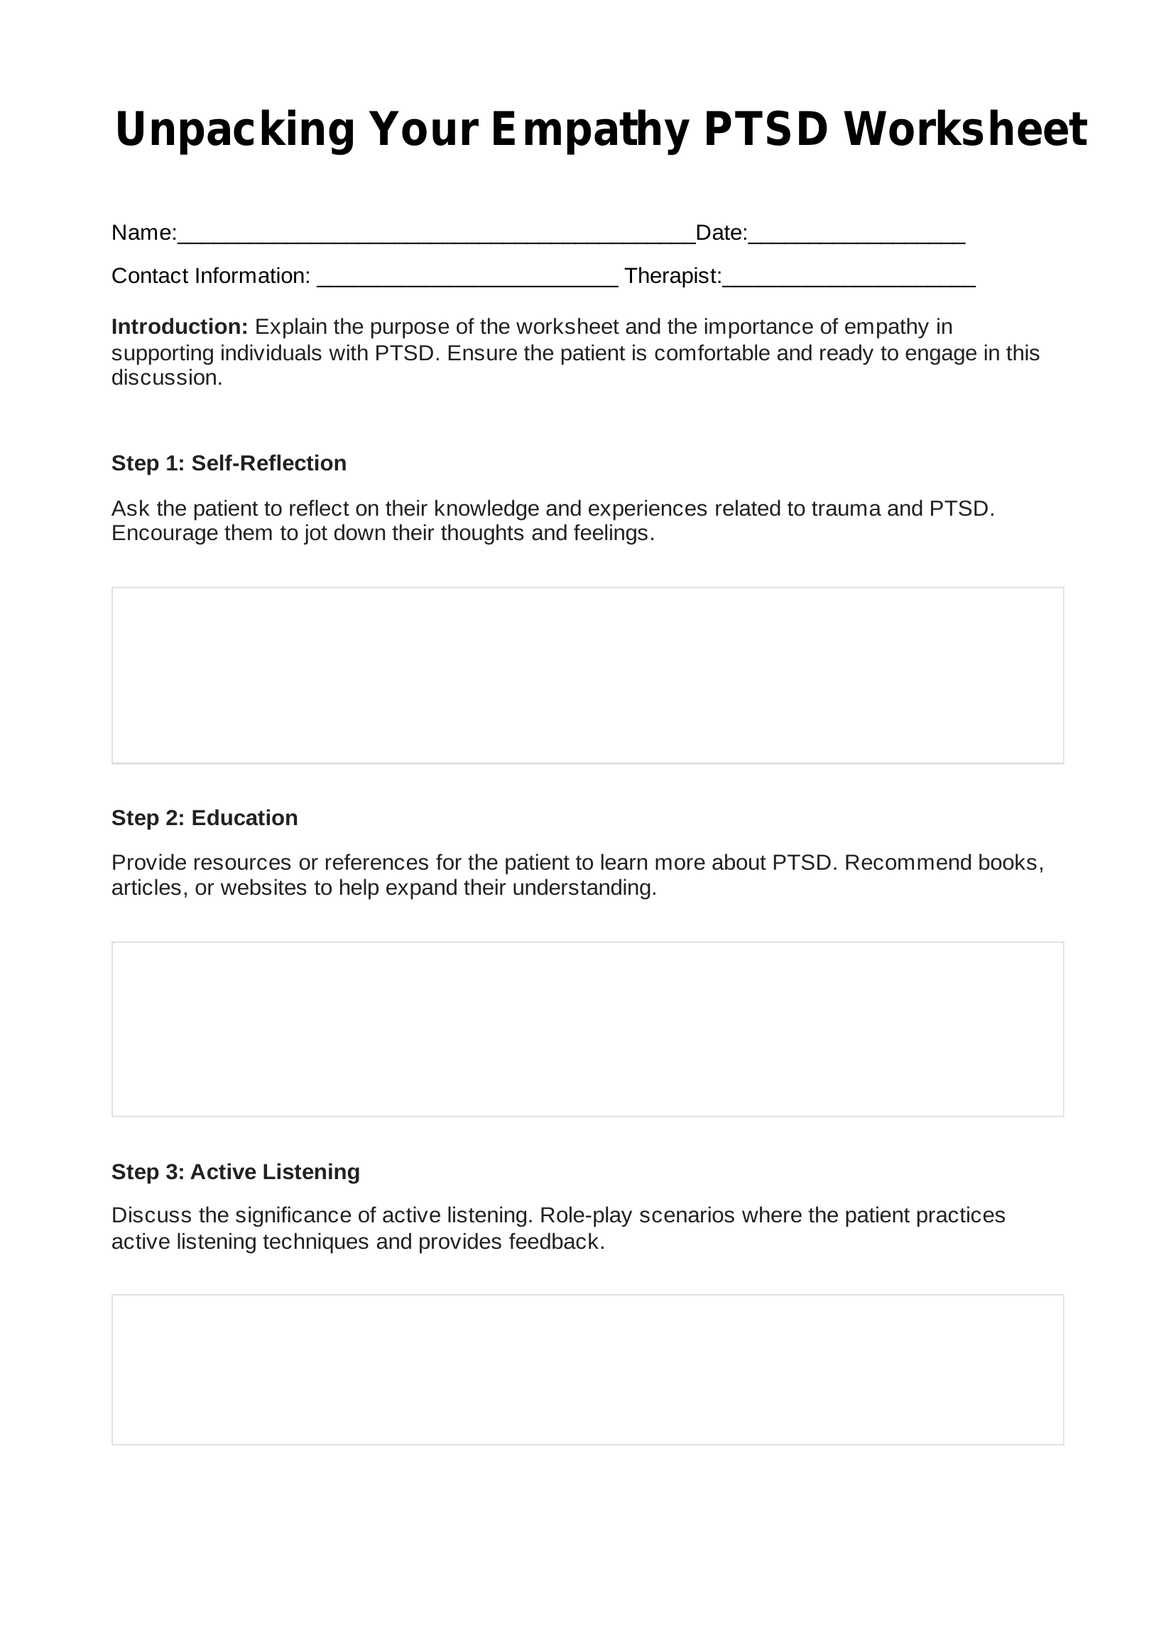 Unpacking Your Empathy PTSD Worksheet PDF Example